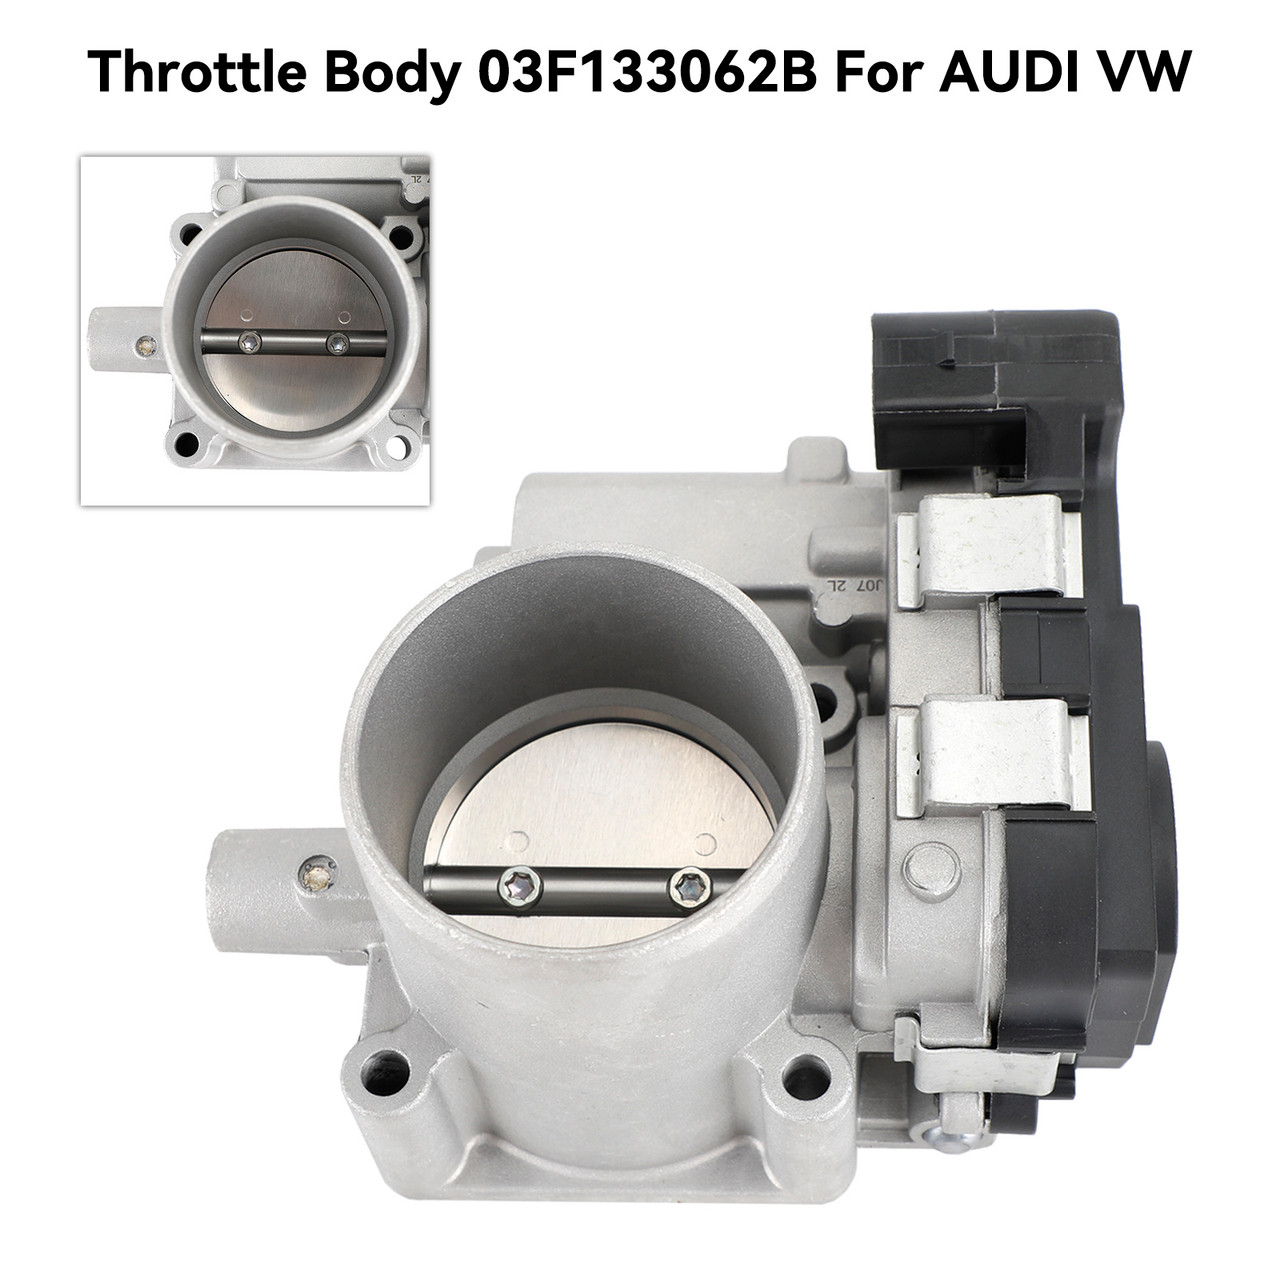 Throttle Body 03F133062B For AUDI VW 1.2 1.4 L Engines CBZB & CBZA